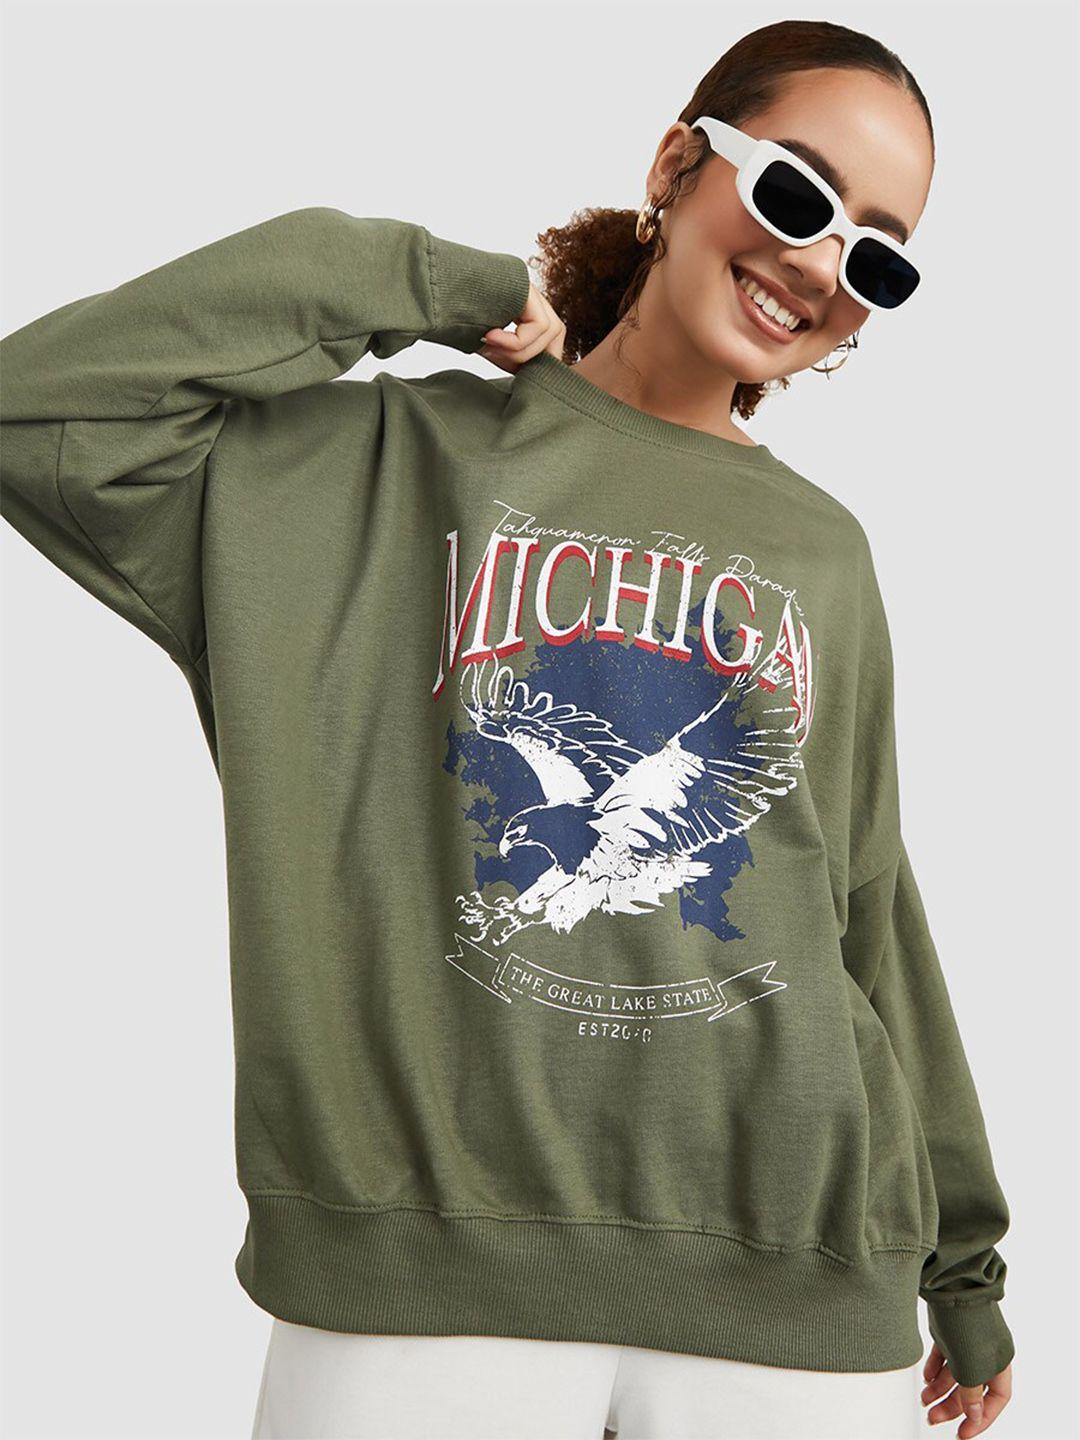 styli women khaki printed sweatshirt